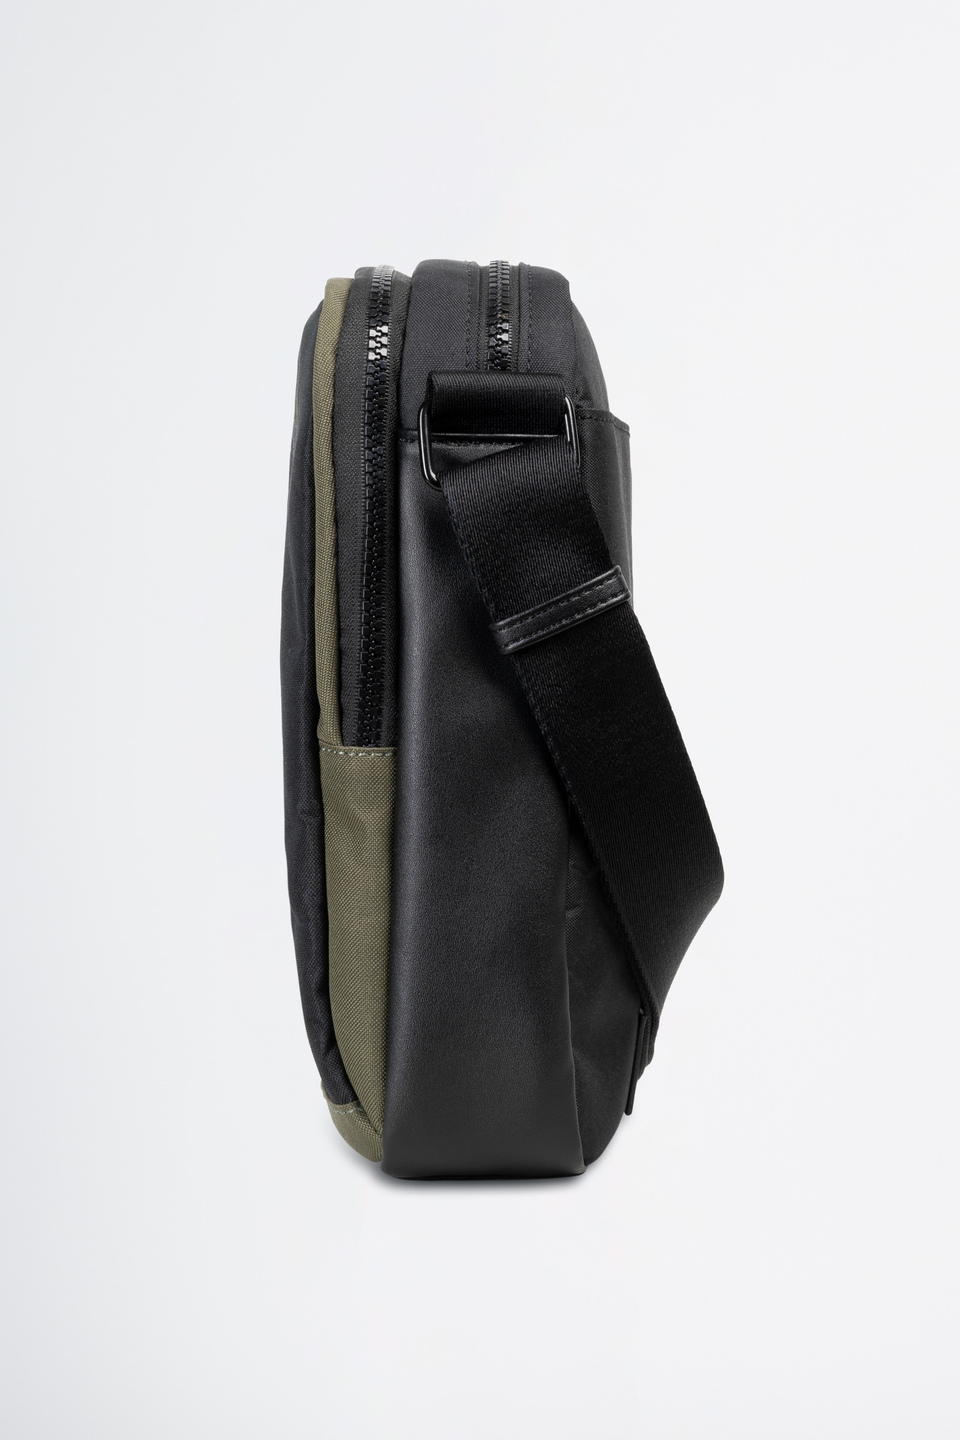 Shoulder bag in fabric | La Martina - Official Online Shop